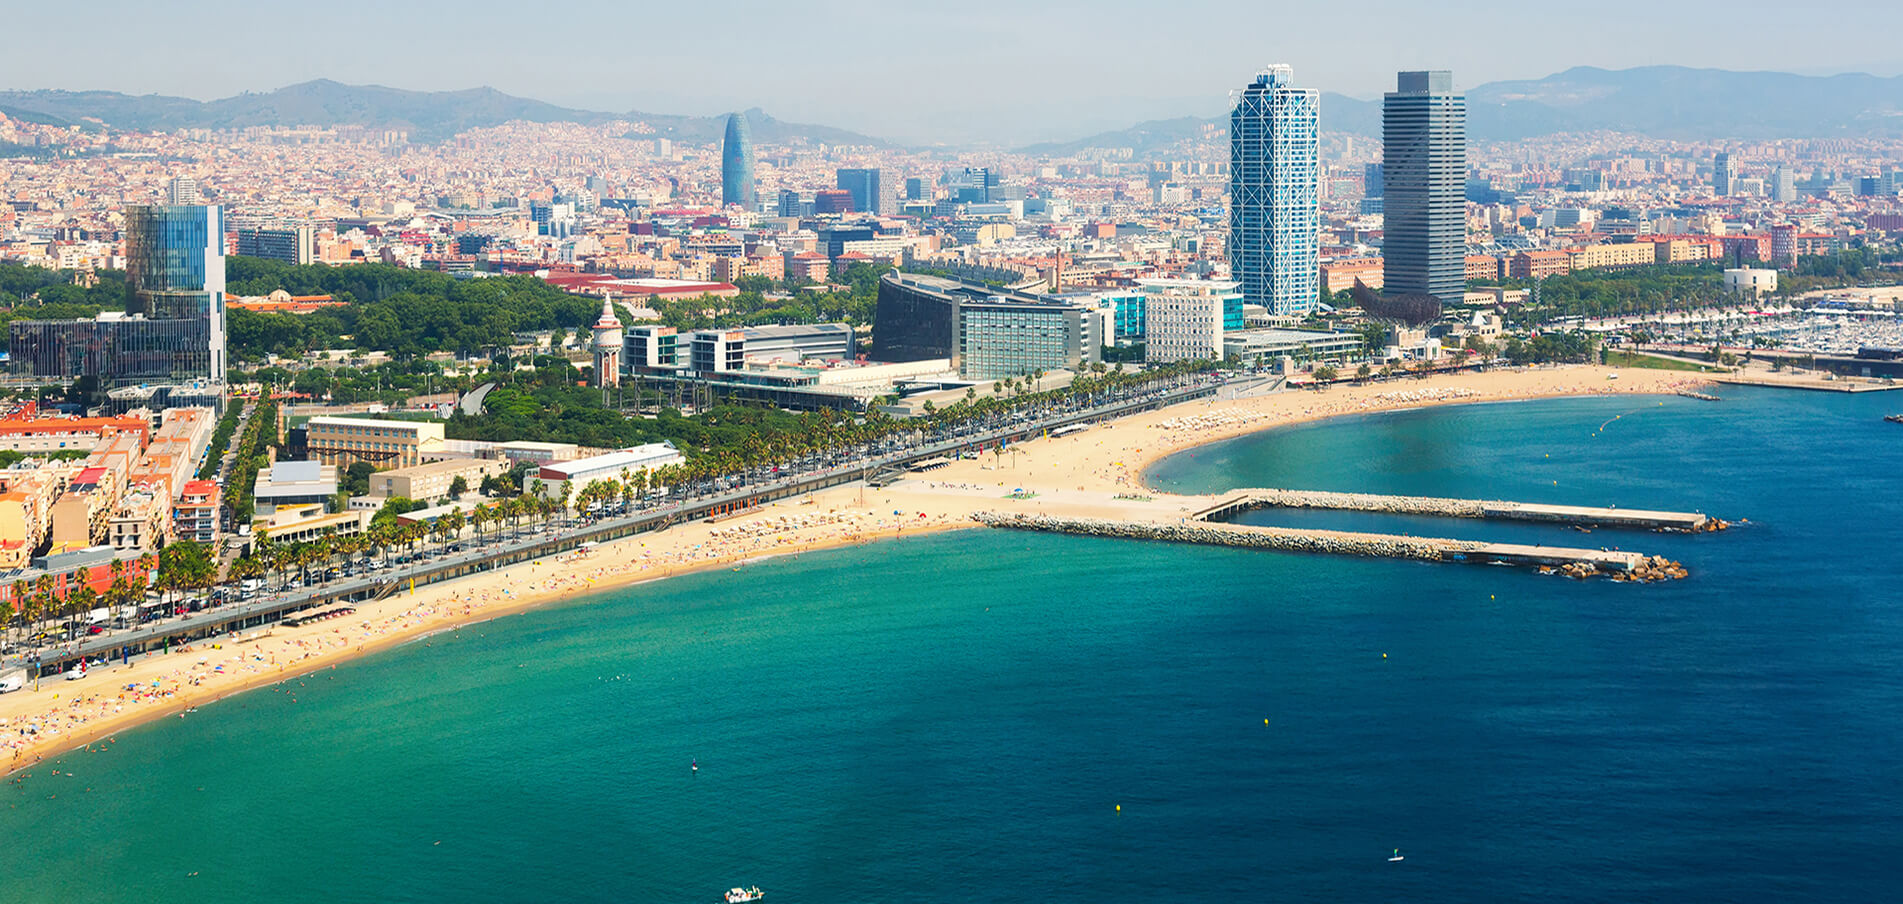 Location de yacht de luxe Barcelone